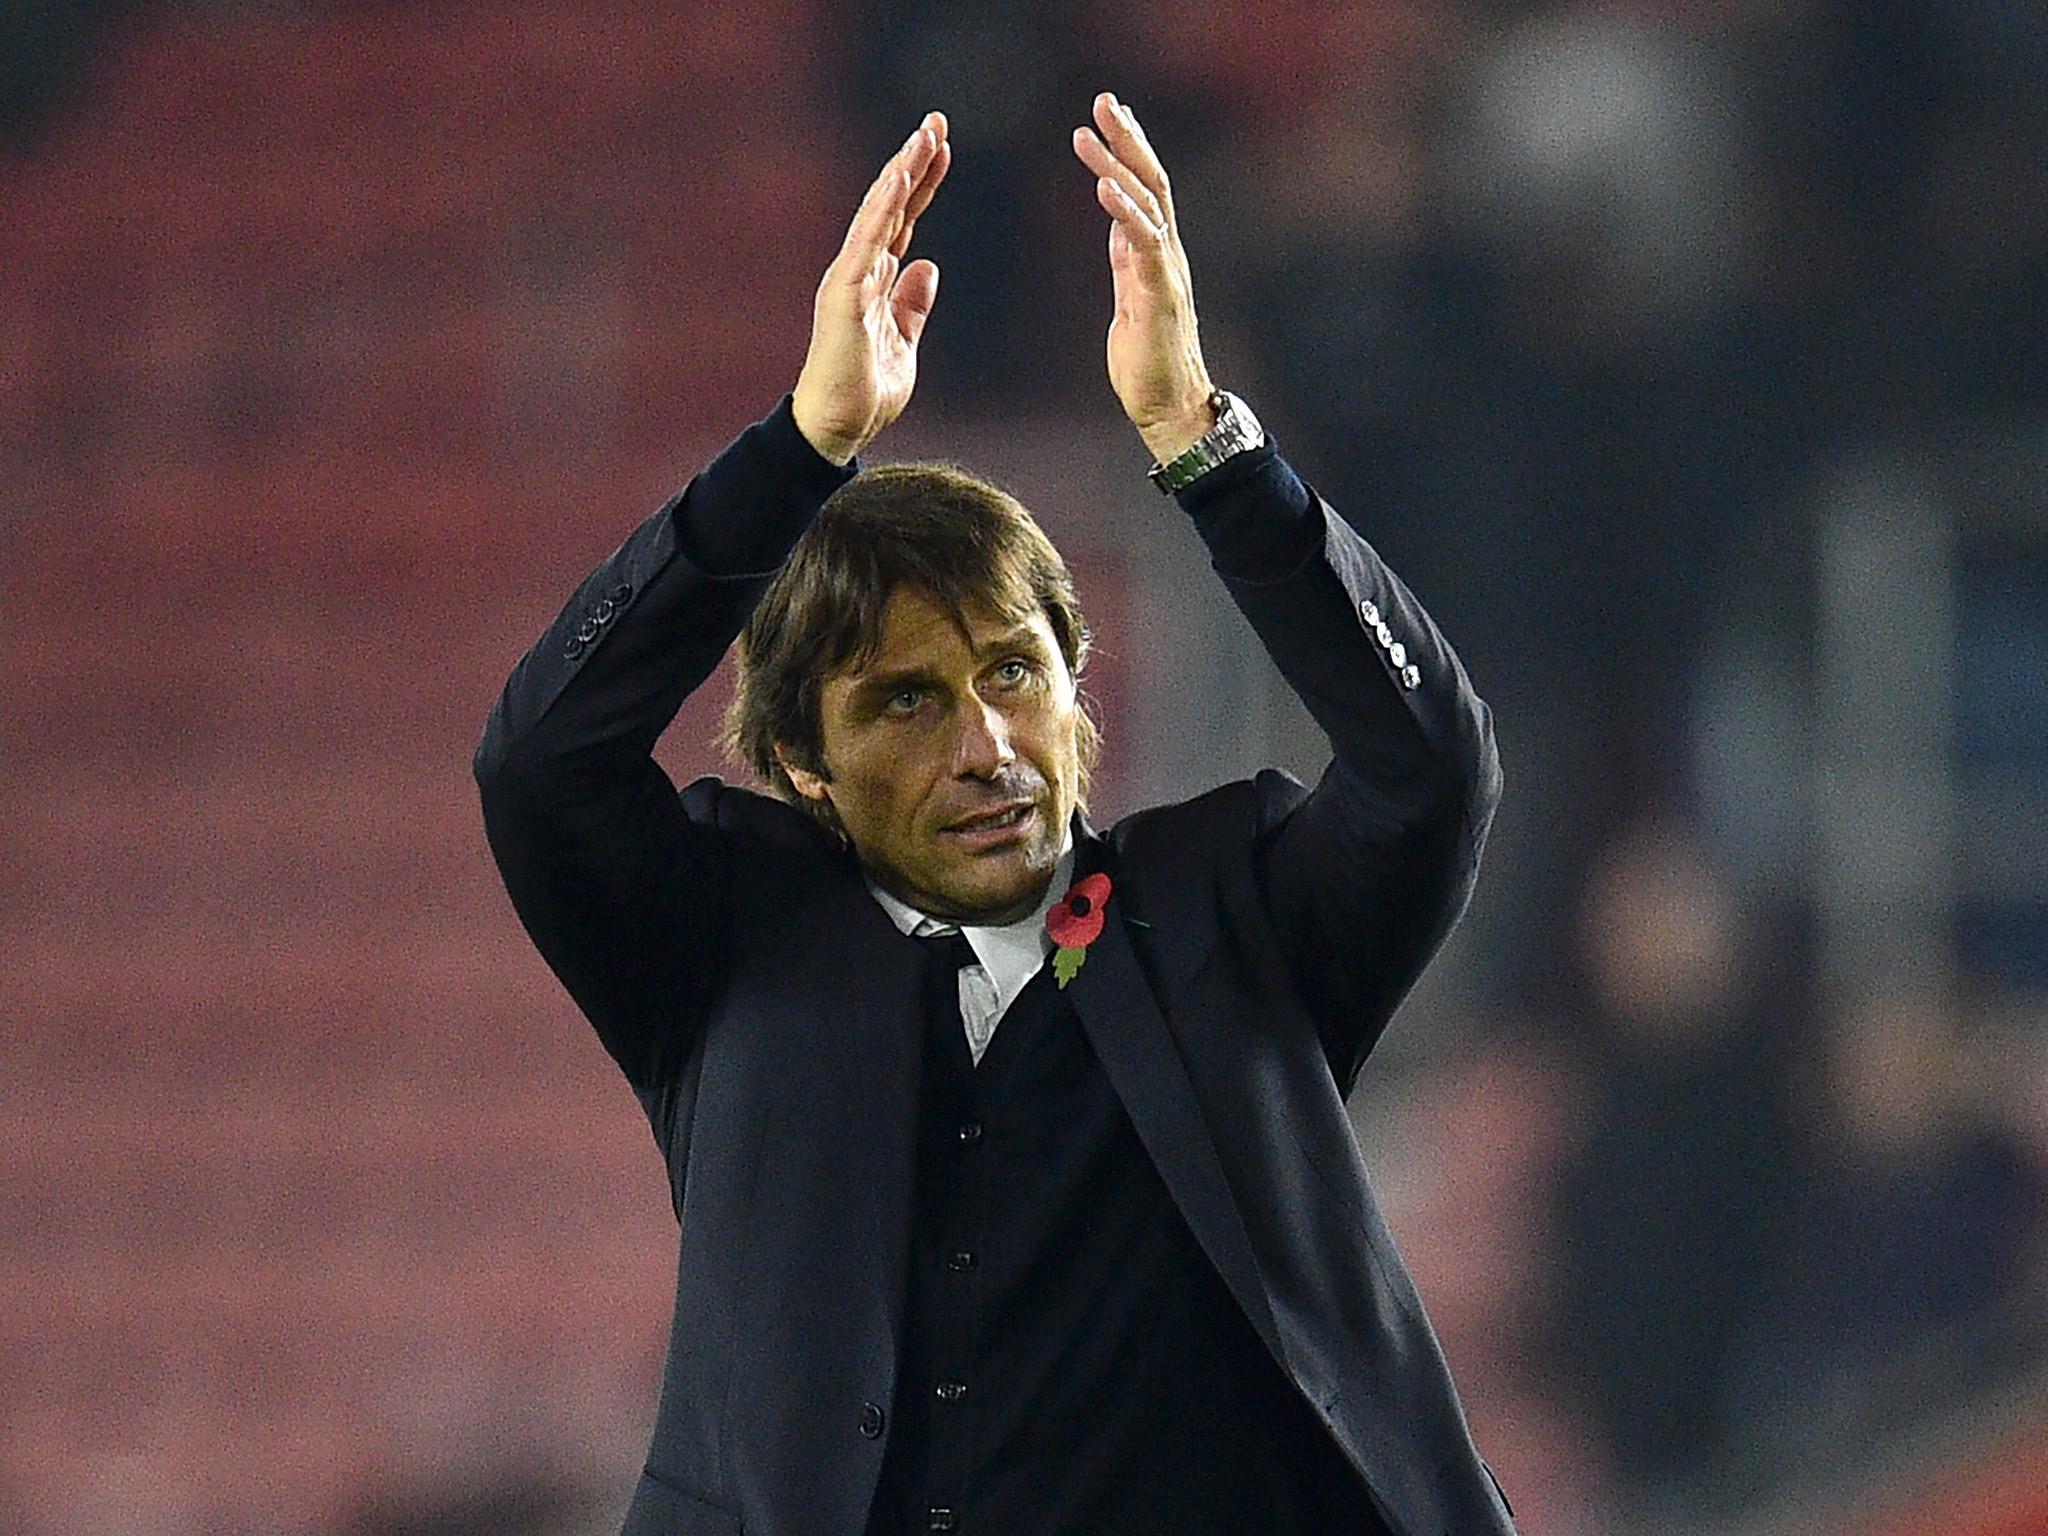 Antonio Conte has transformed Chelsea into title contenders in recent weeks